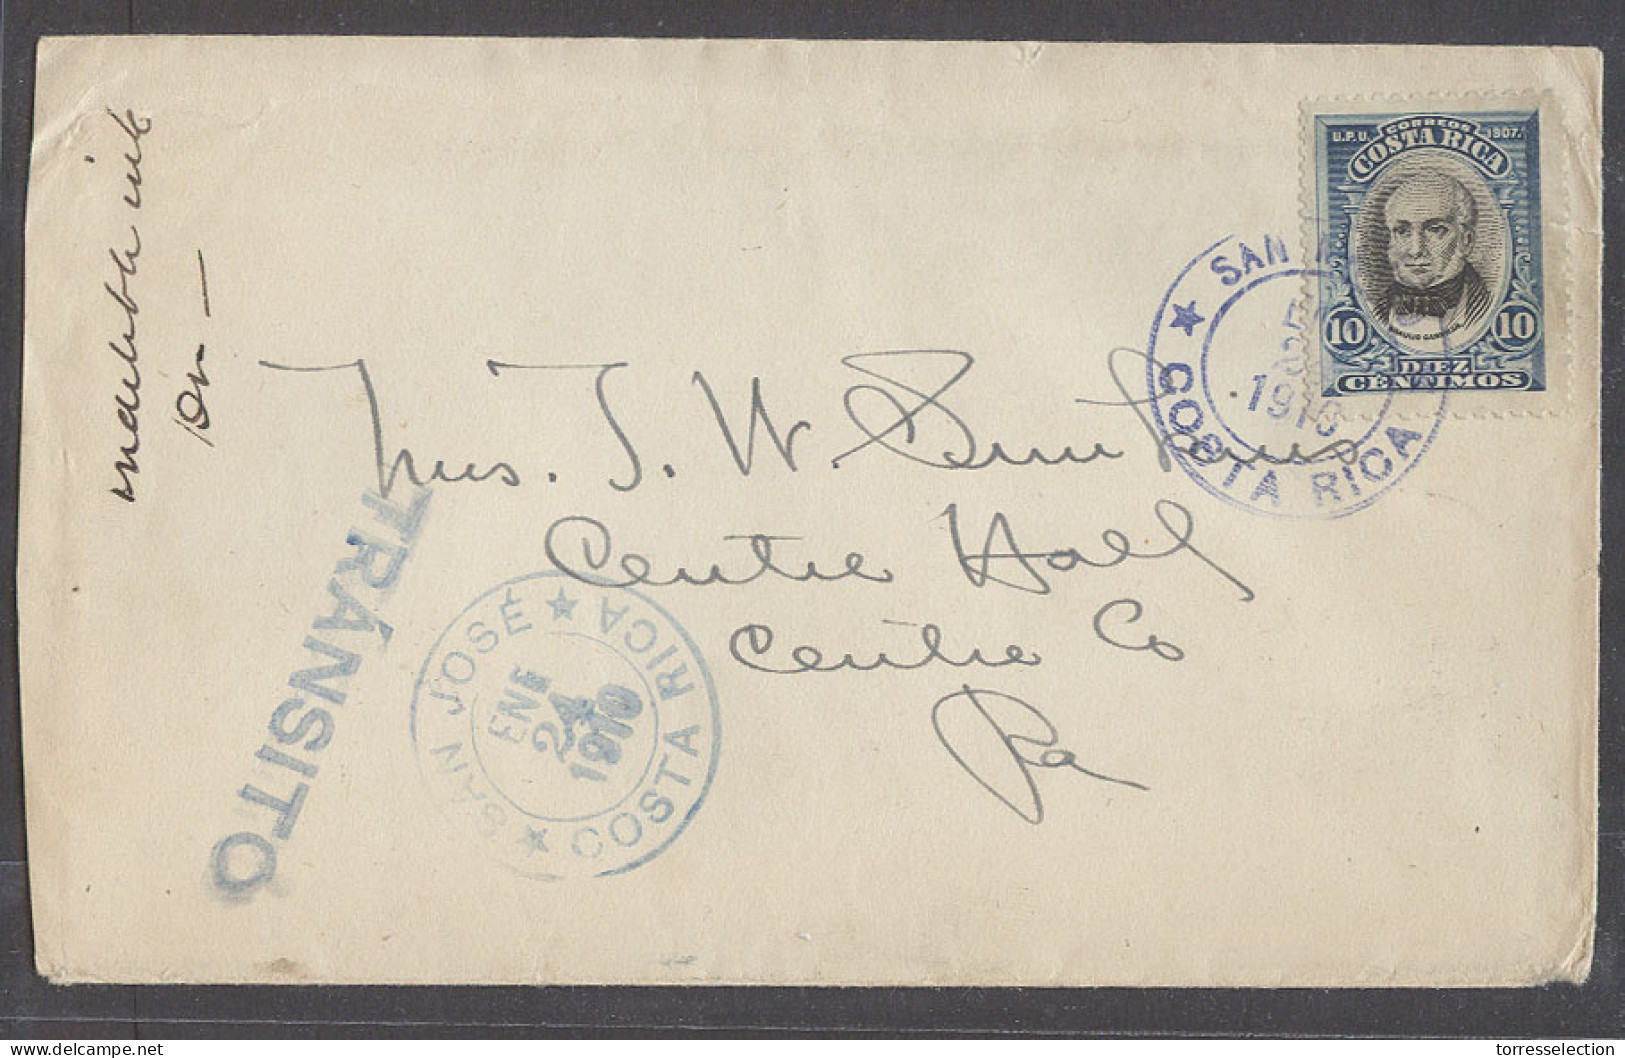 COSTA RICA. 1910 (24 Enero). San Mateo - Centre Hall, PA, USA. Env Fkd Single 10c Blue Cds. Via San Jose. VF Used. - Costa Rica